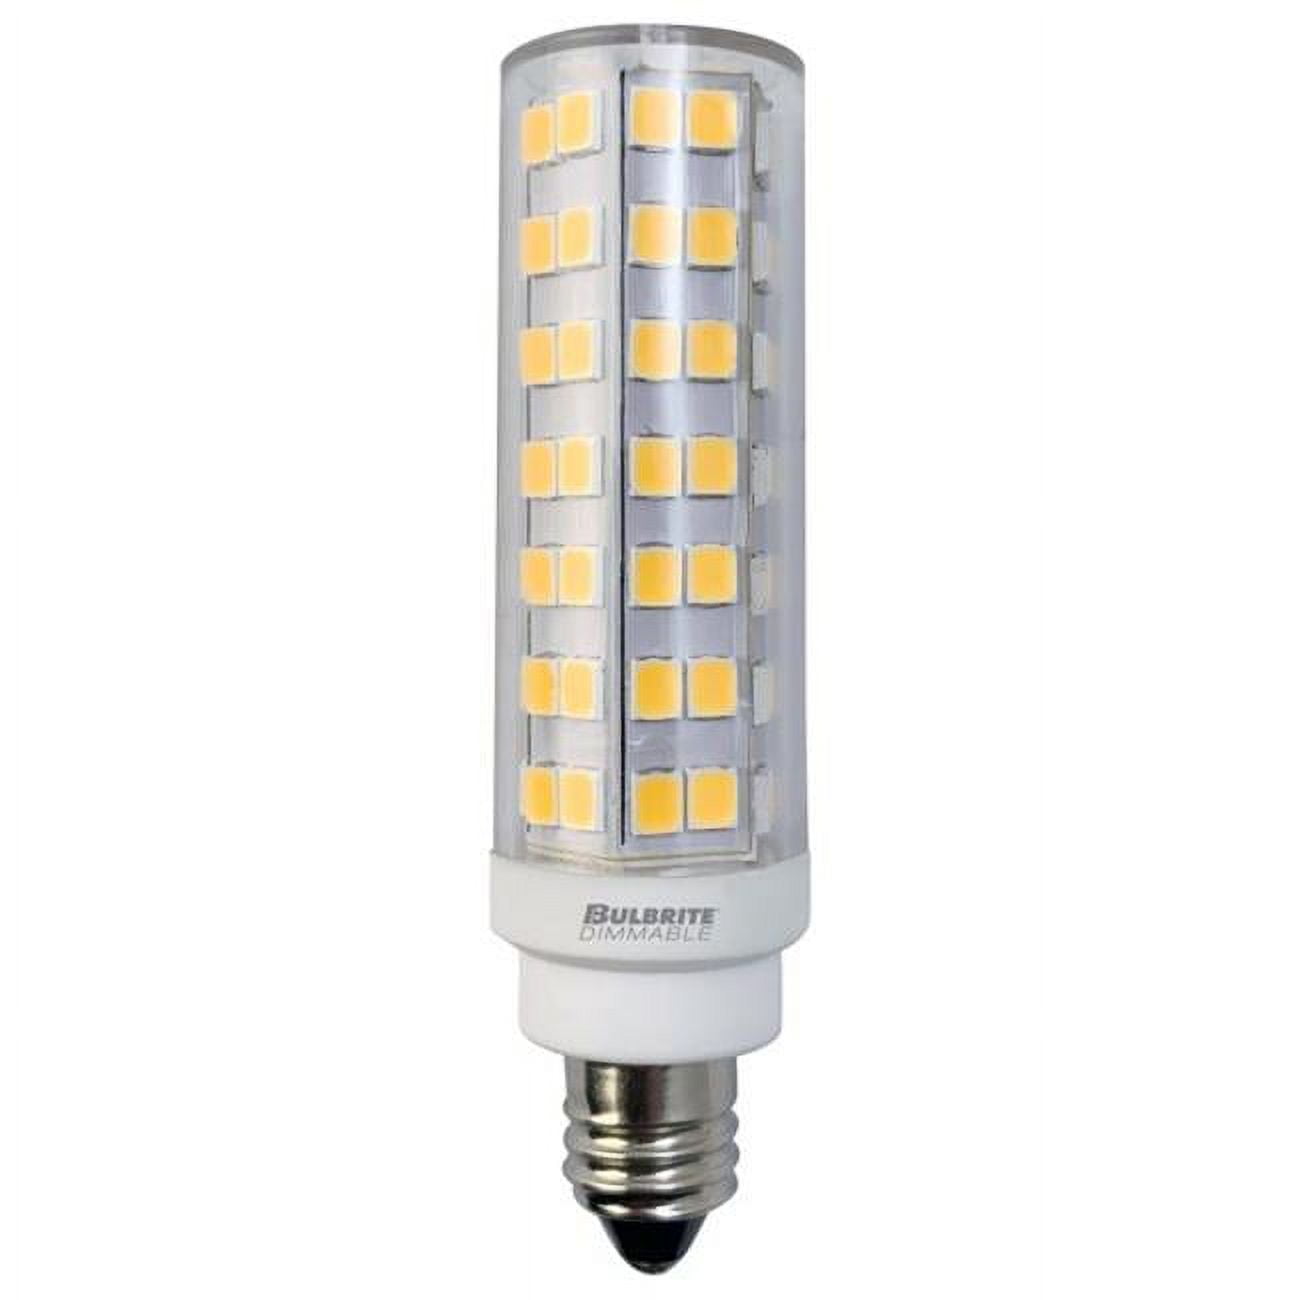 Picture of Bulbrite Pack of (2) 6.5 Watt 120V Dimmable Clear T6 LED Mini Light Bulbs with Mini-Candelabra (E11) Base  2700K Warm White Light  700 Lumens